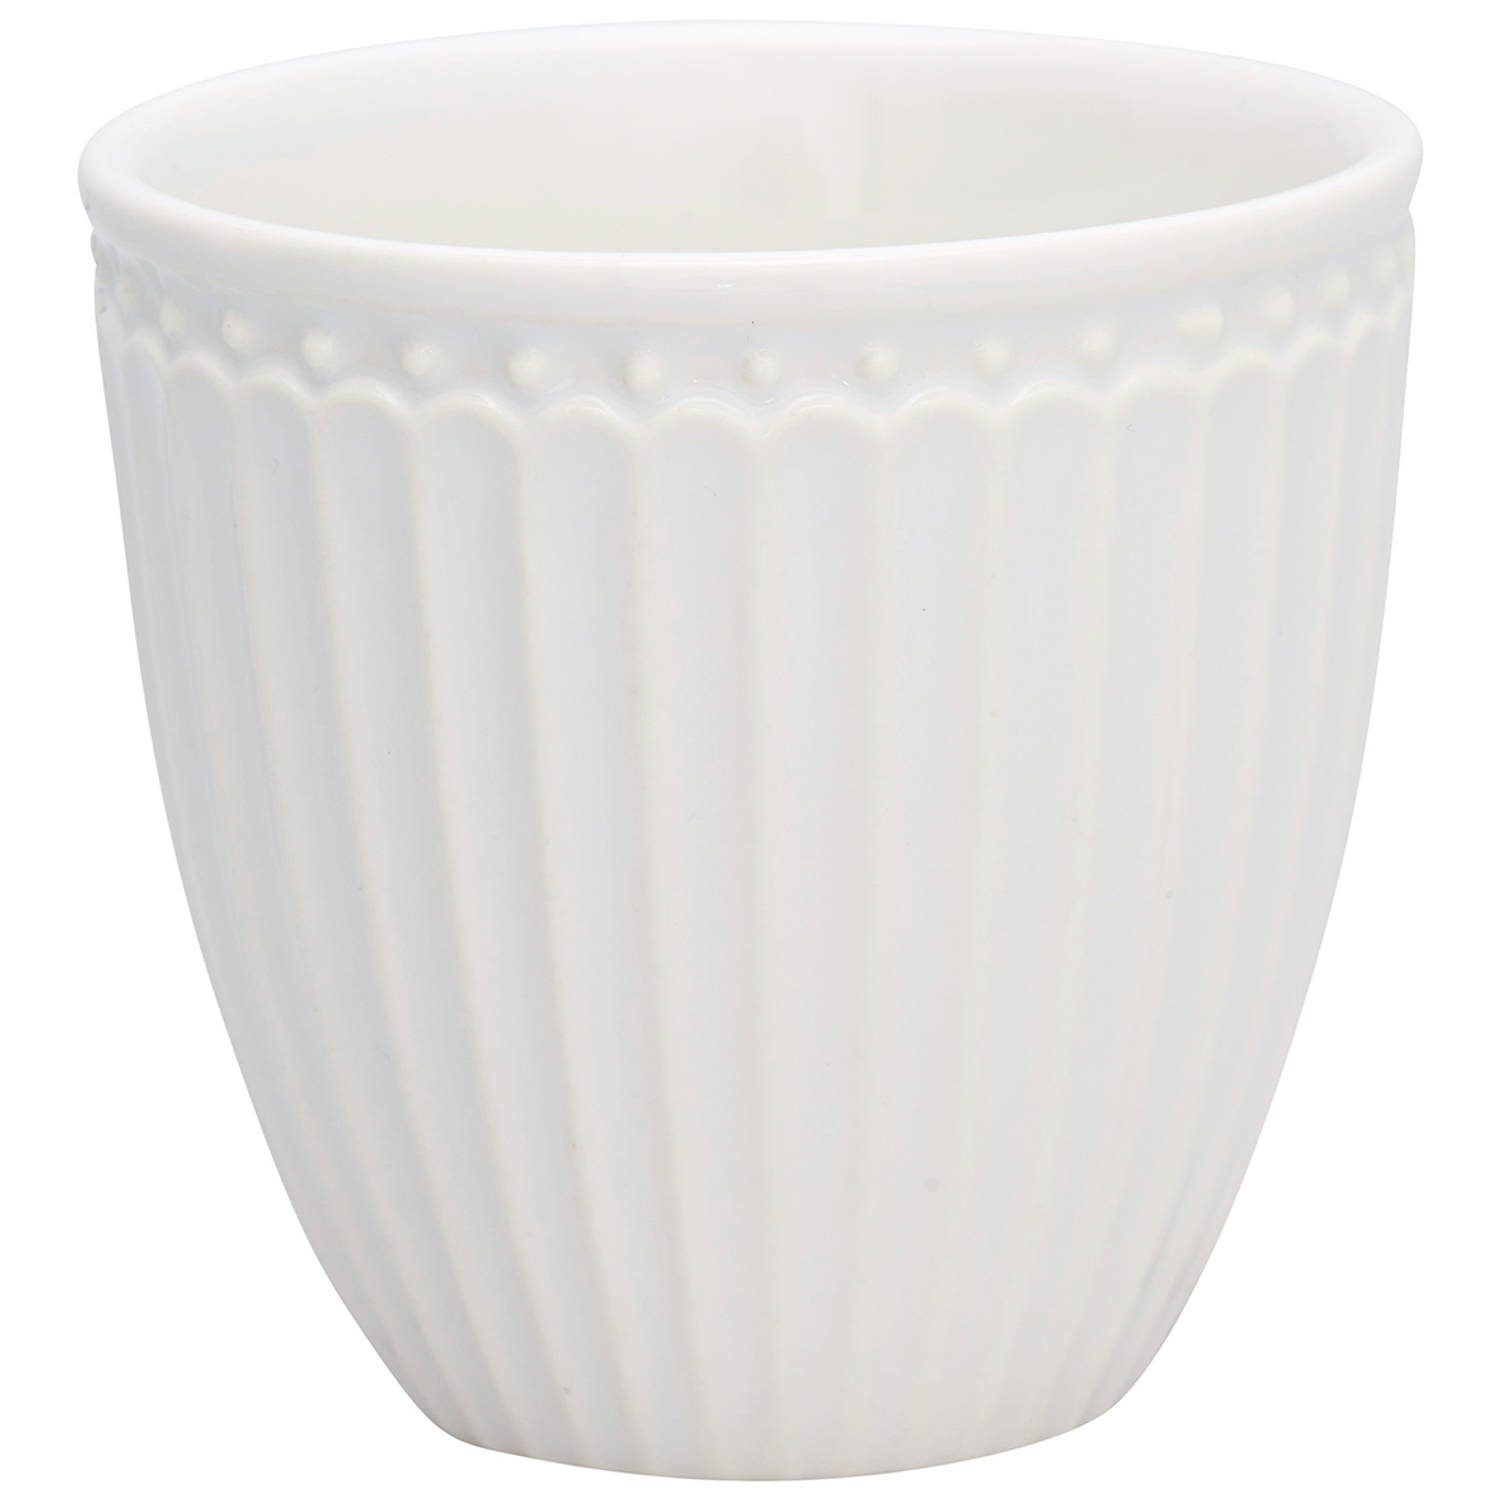 GreenGate Espressokopje (mini latte cup) Alice wit 125 ml - H 7 cm - Ø 7 cm